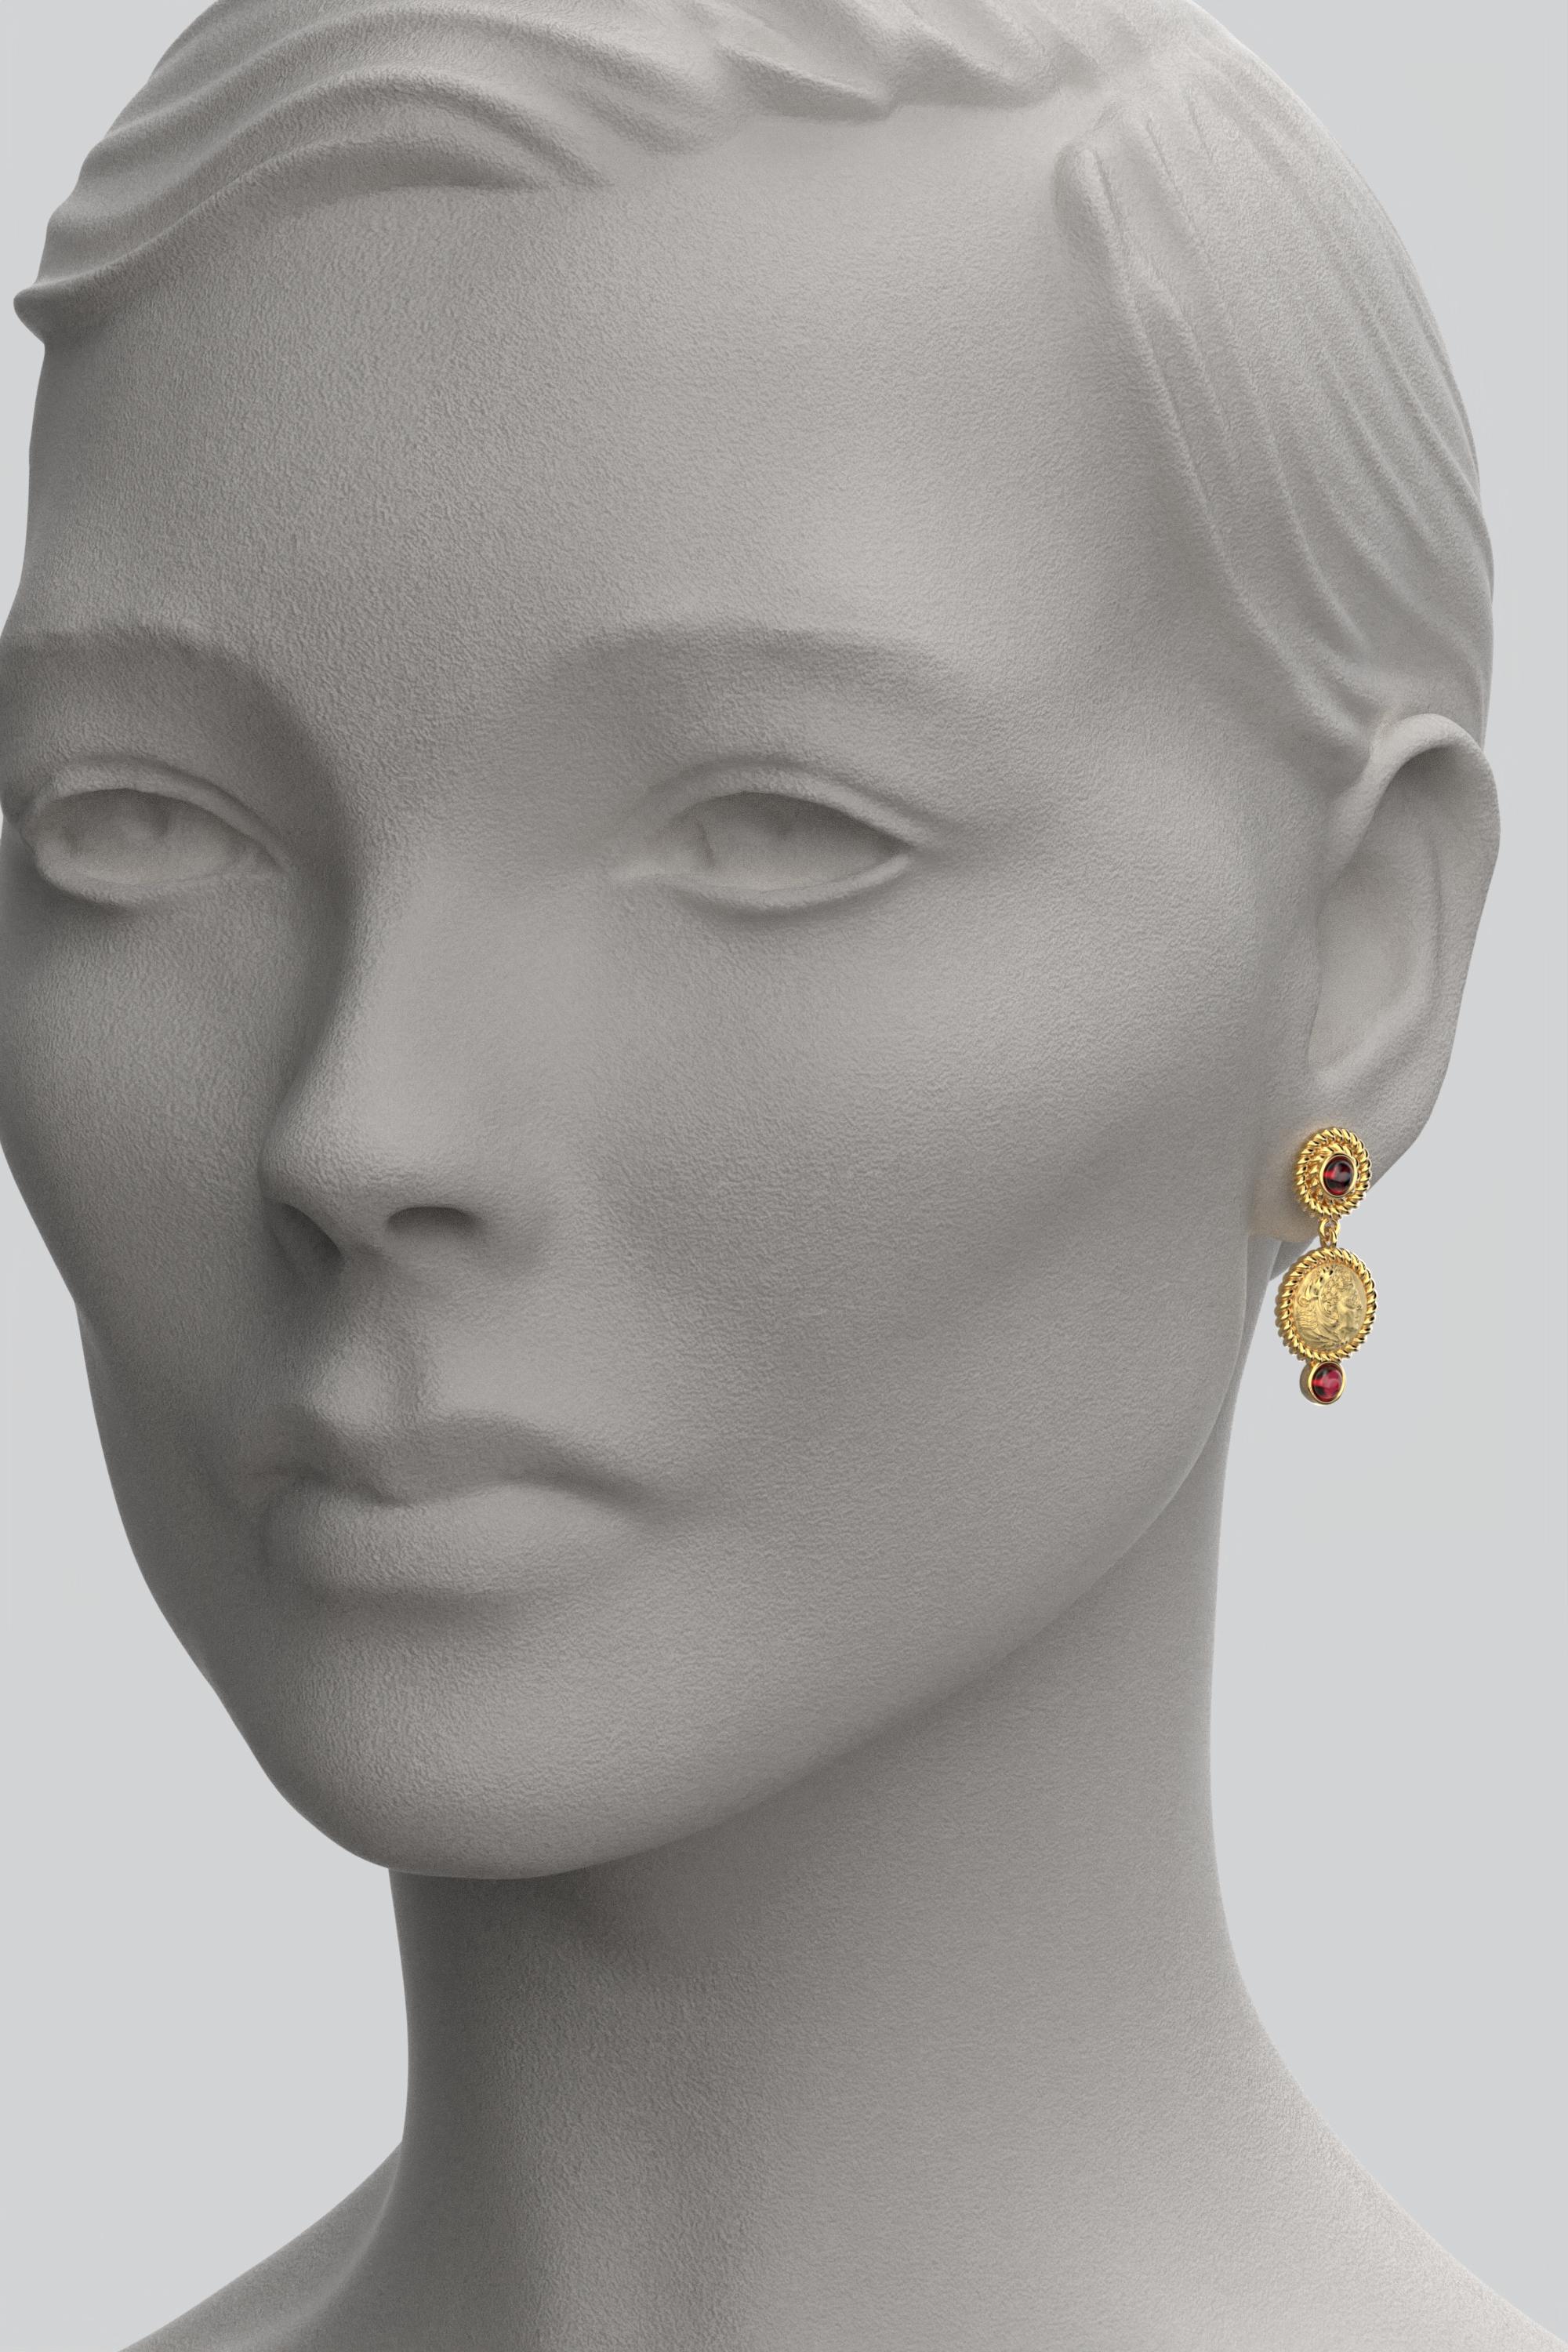 Greek Revival 18k Gold Dangle Earrings in Ancient Greek Style | Italian Jewelry made in Italy For Sale